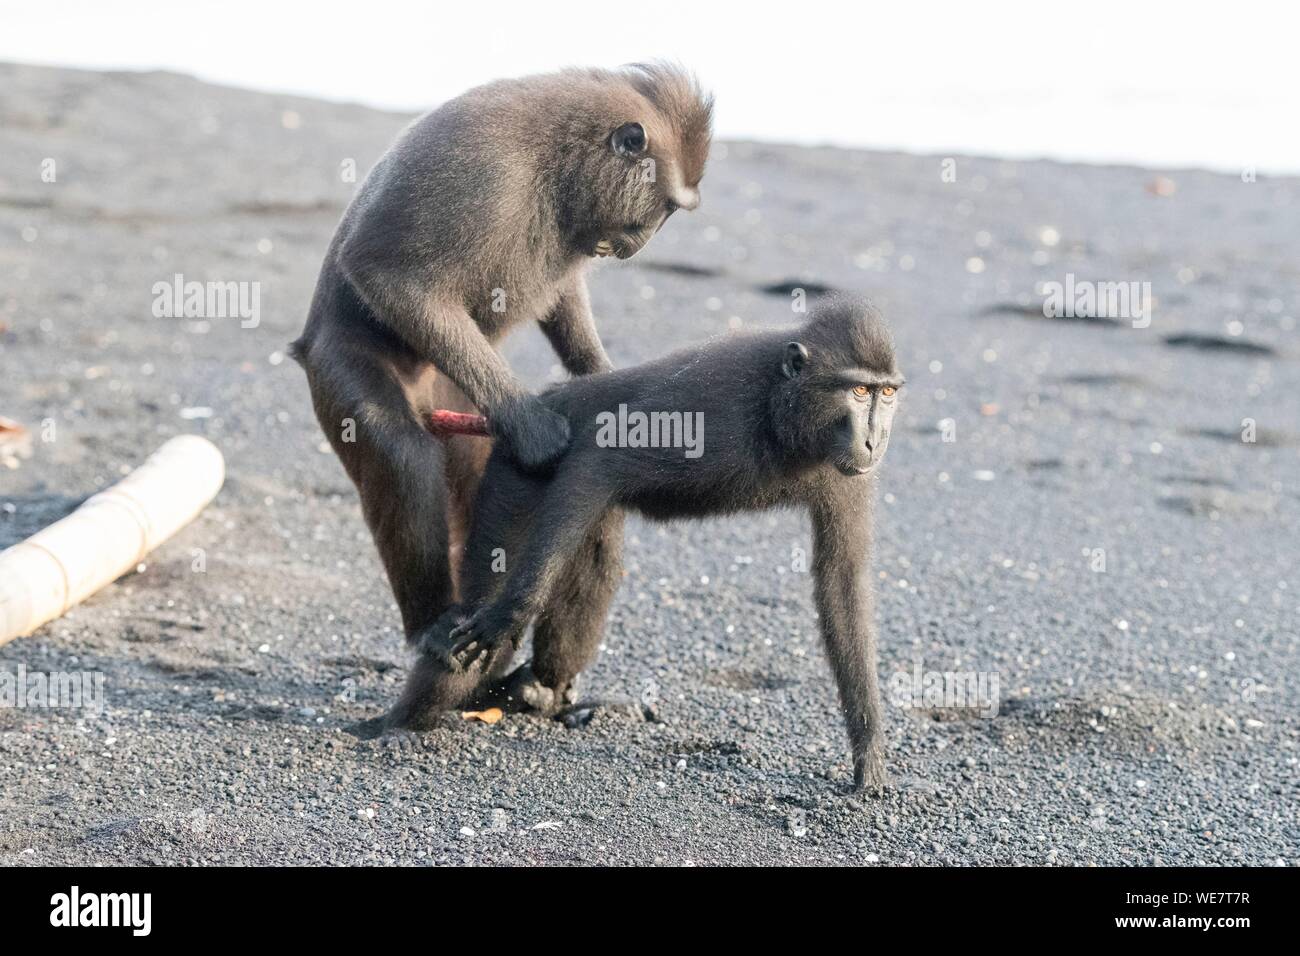 monkey mating with dog